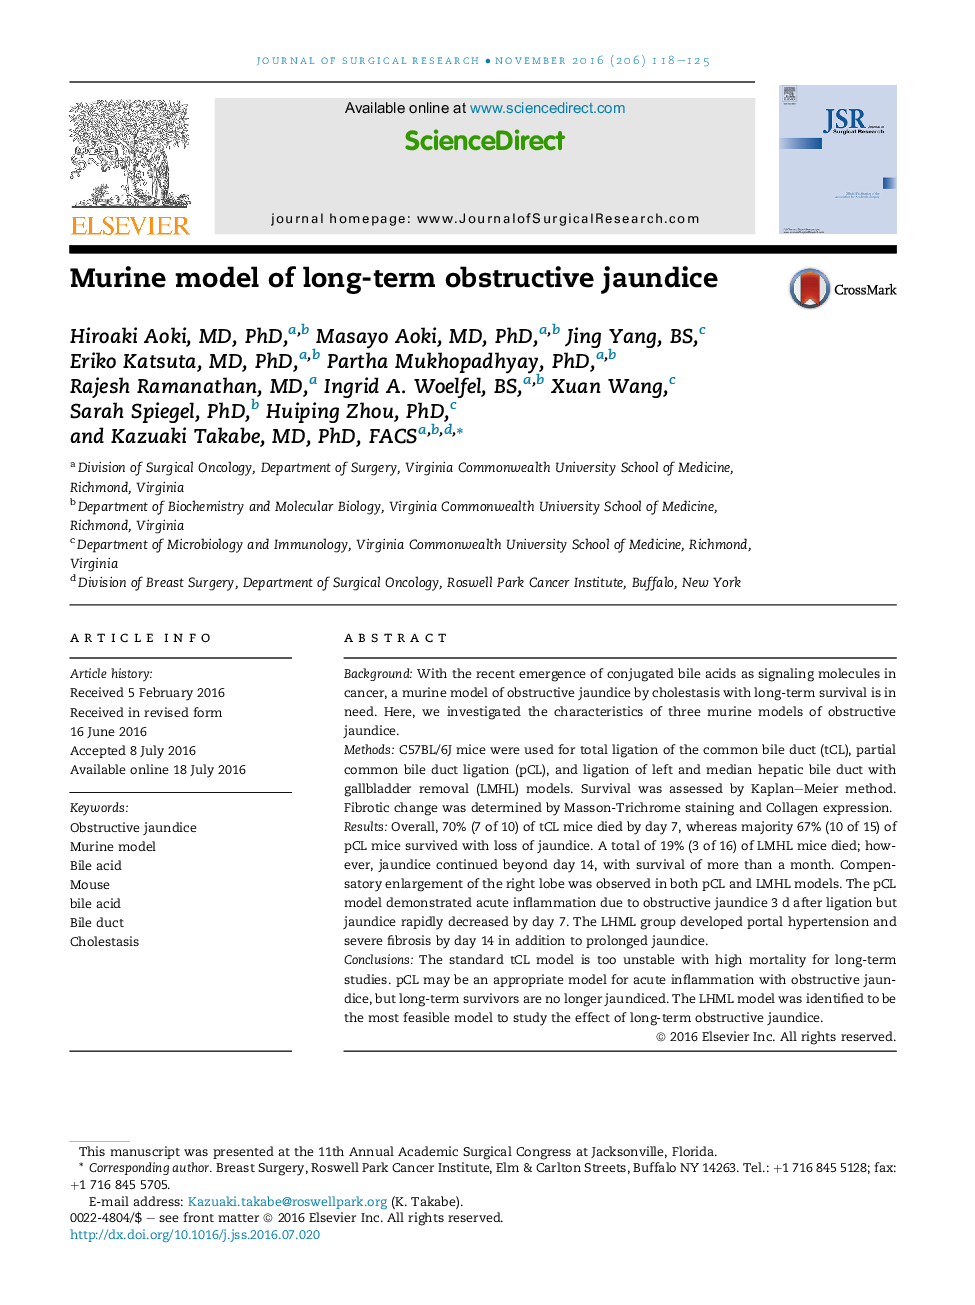 Murine model of long-term obstructive jaundice 